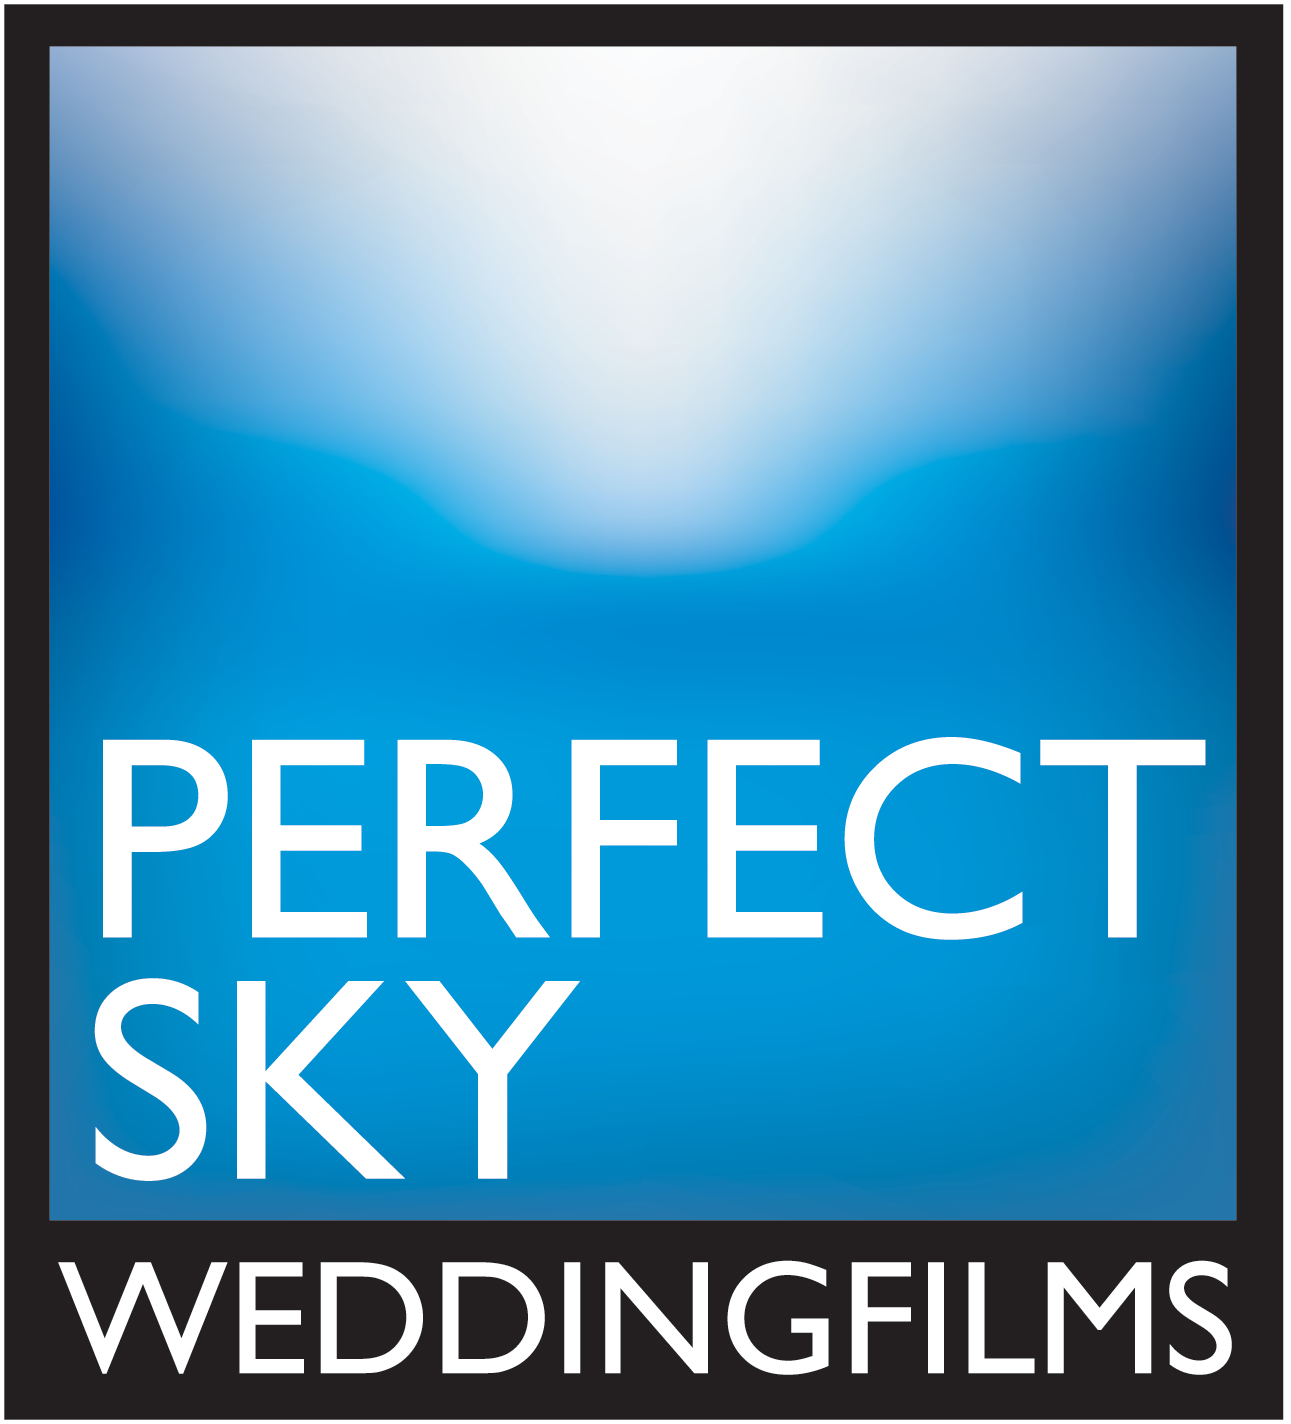 Perfect Sky Wedding Films - Orlando and Destination Wedding Video